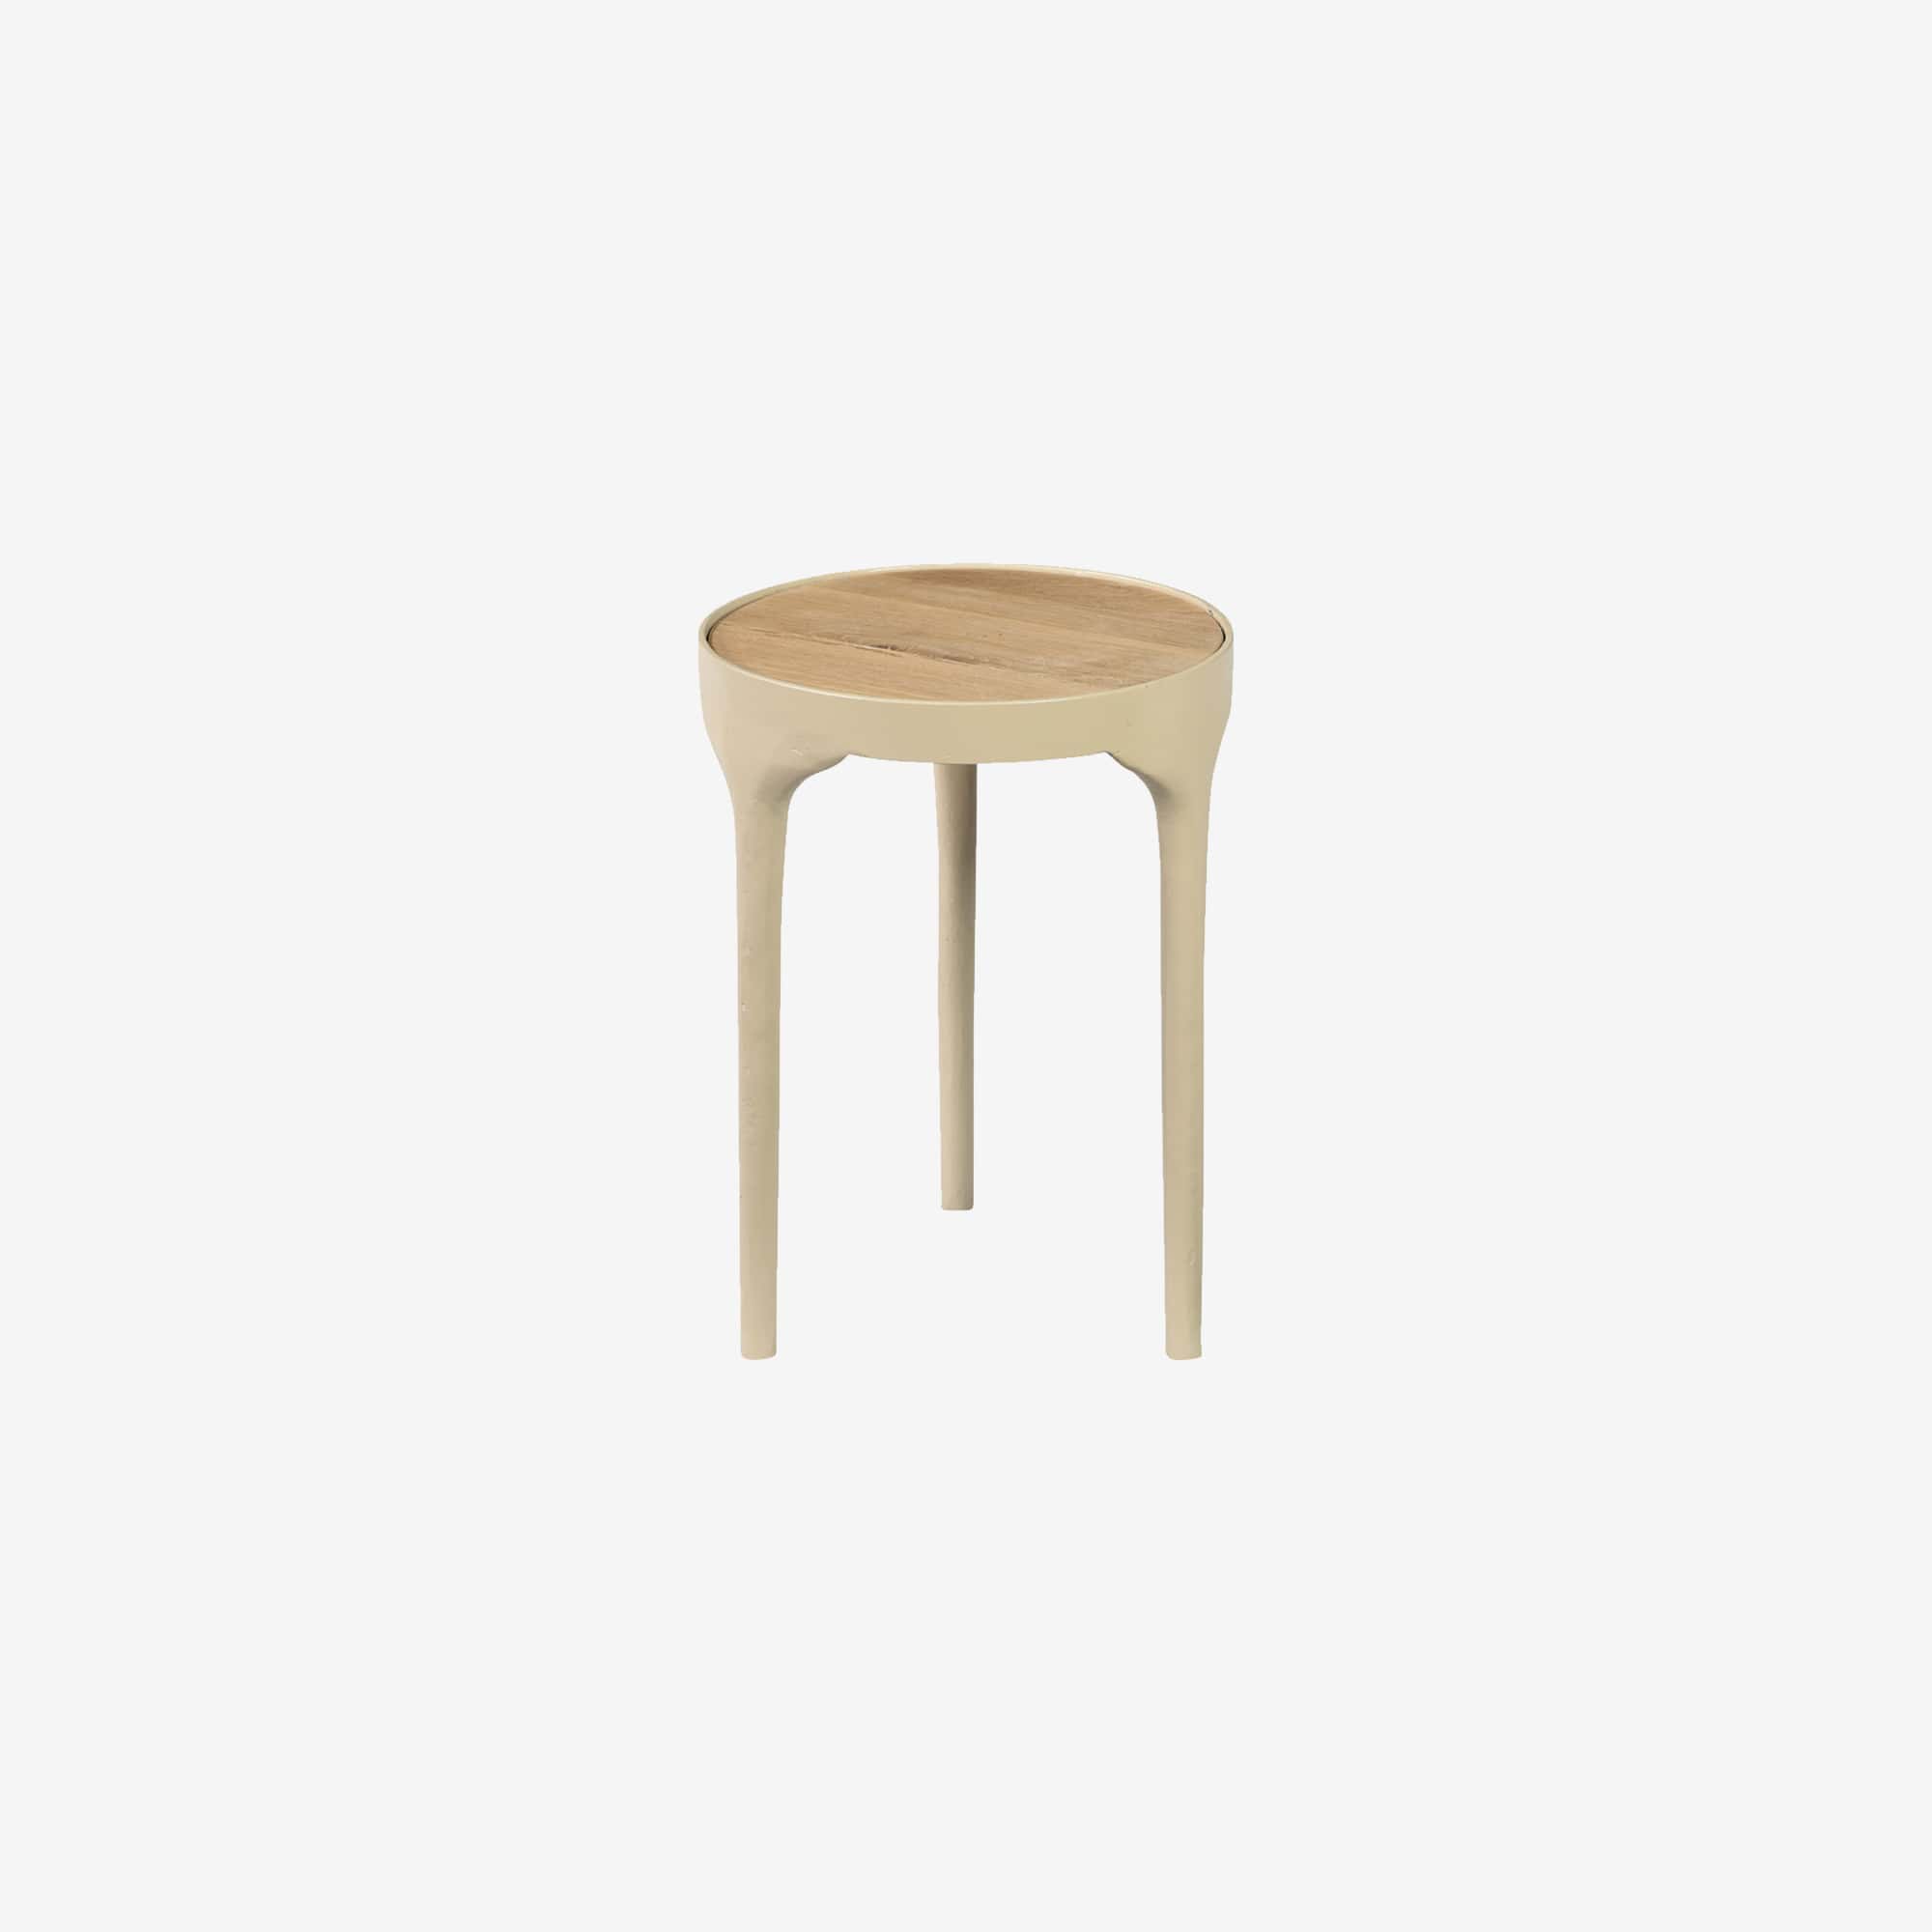 Coffee table iowa – medium